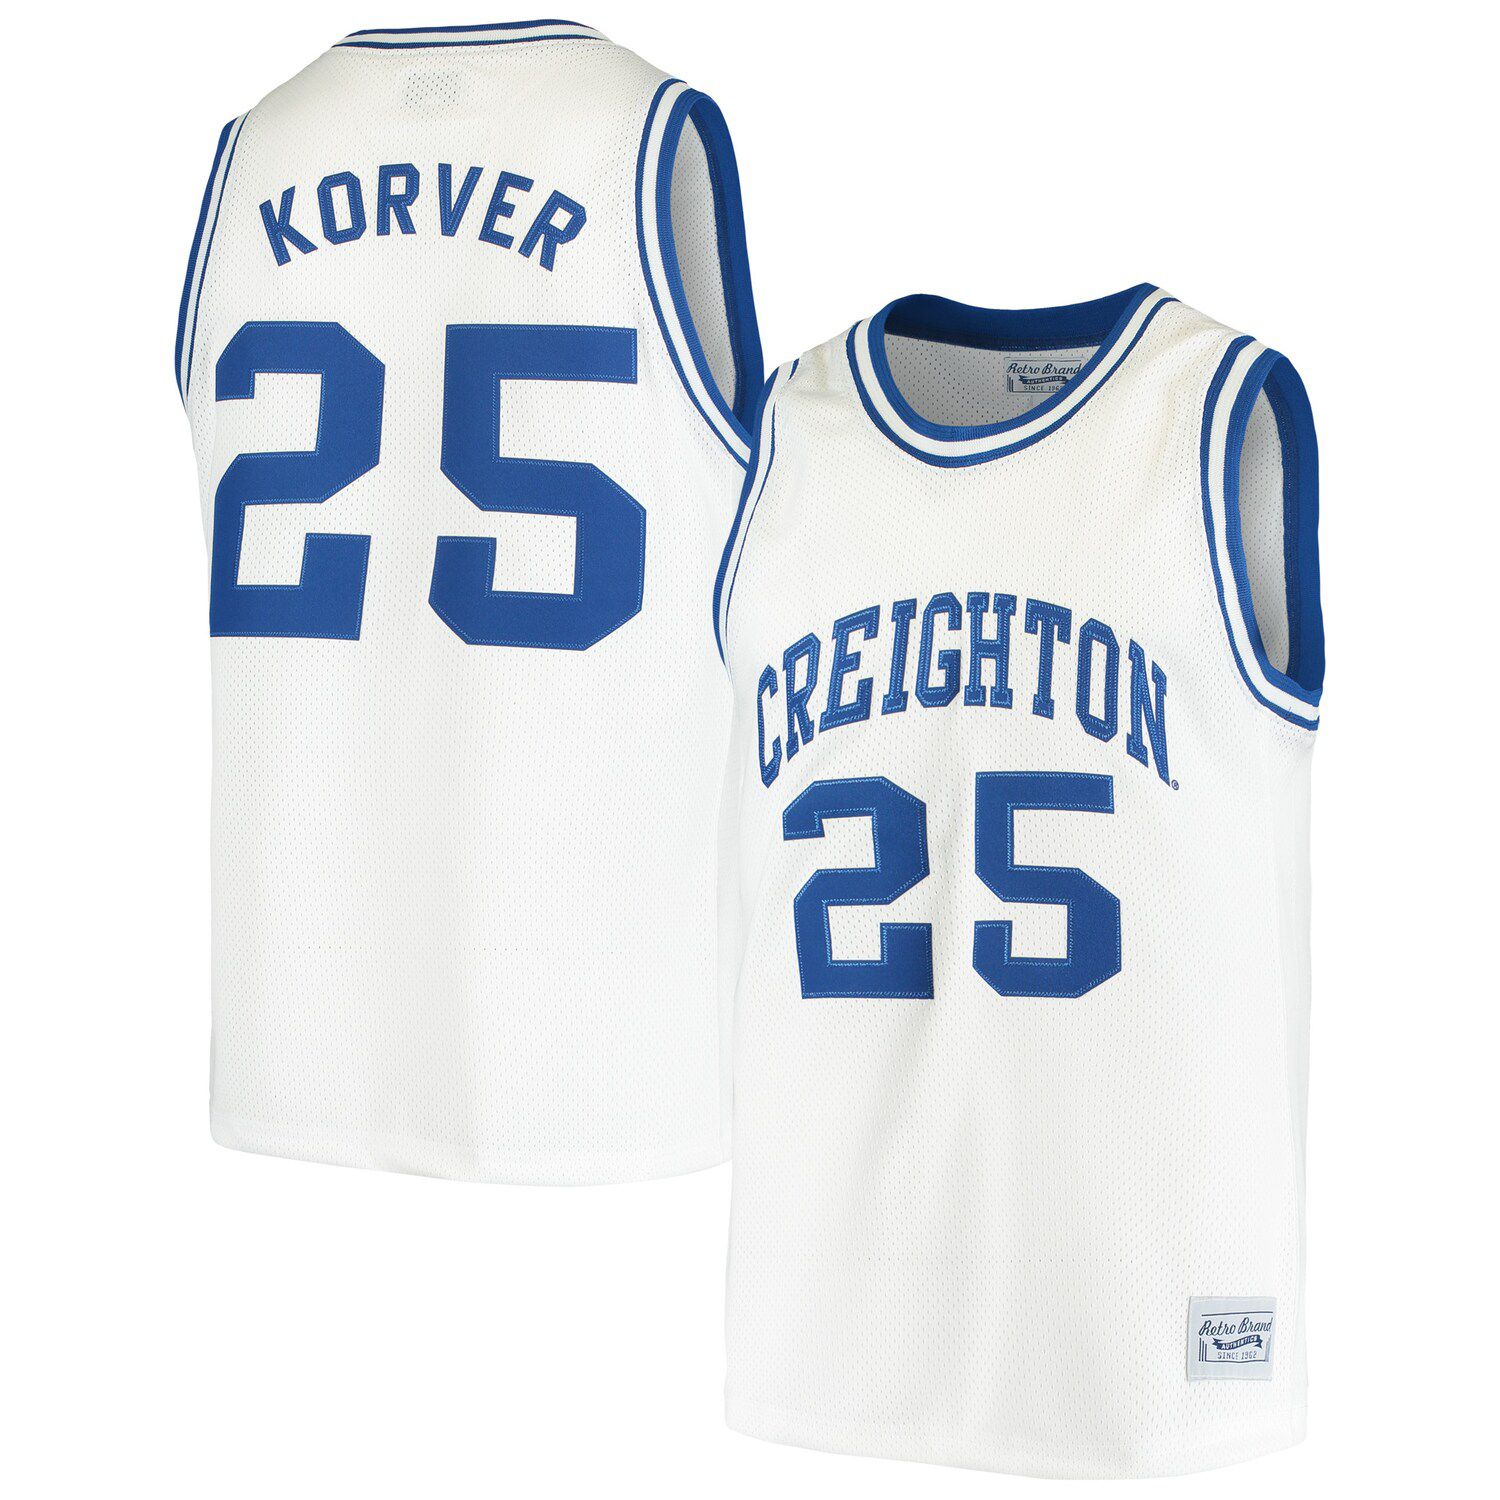 creighton basketball jersey